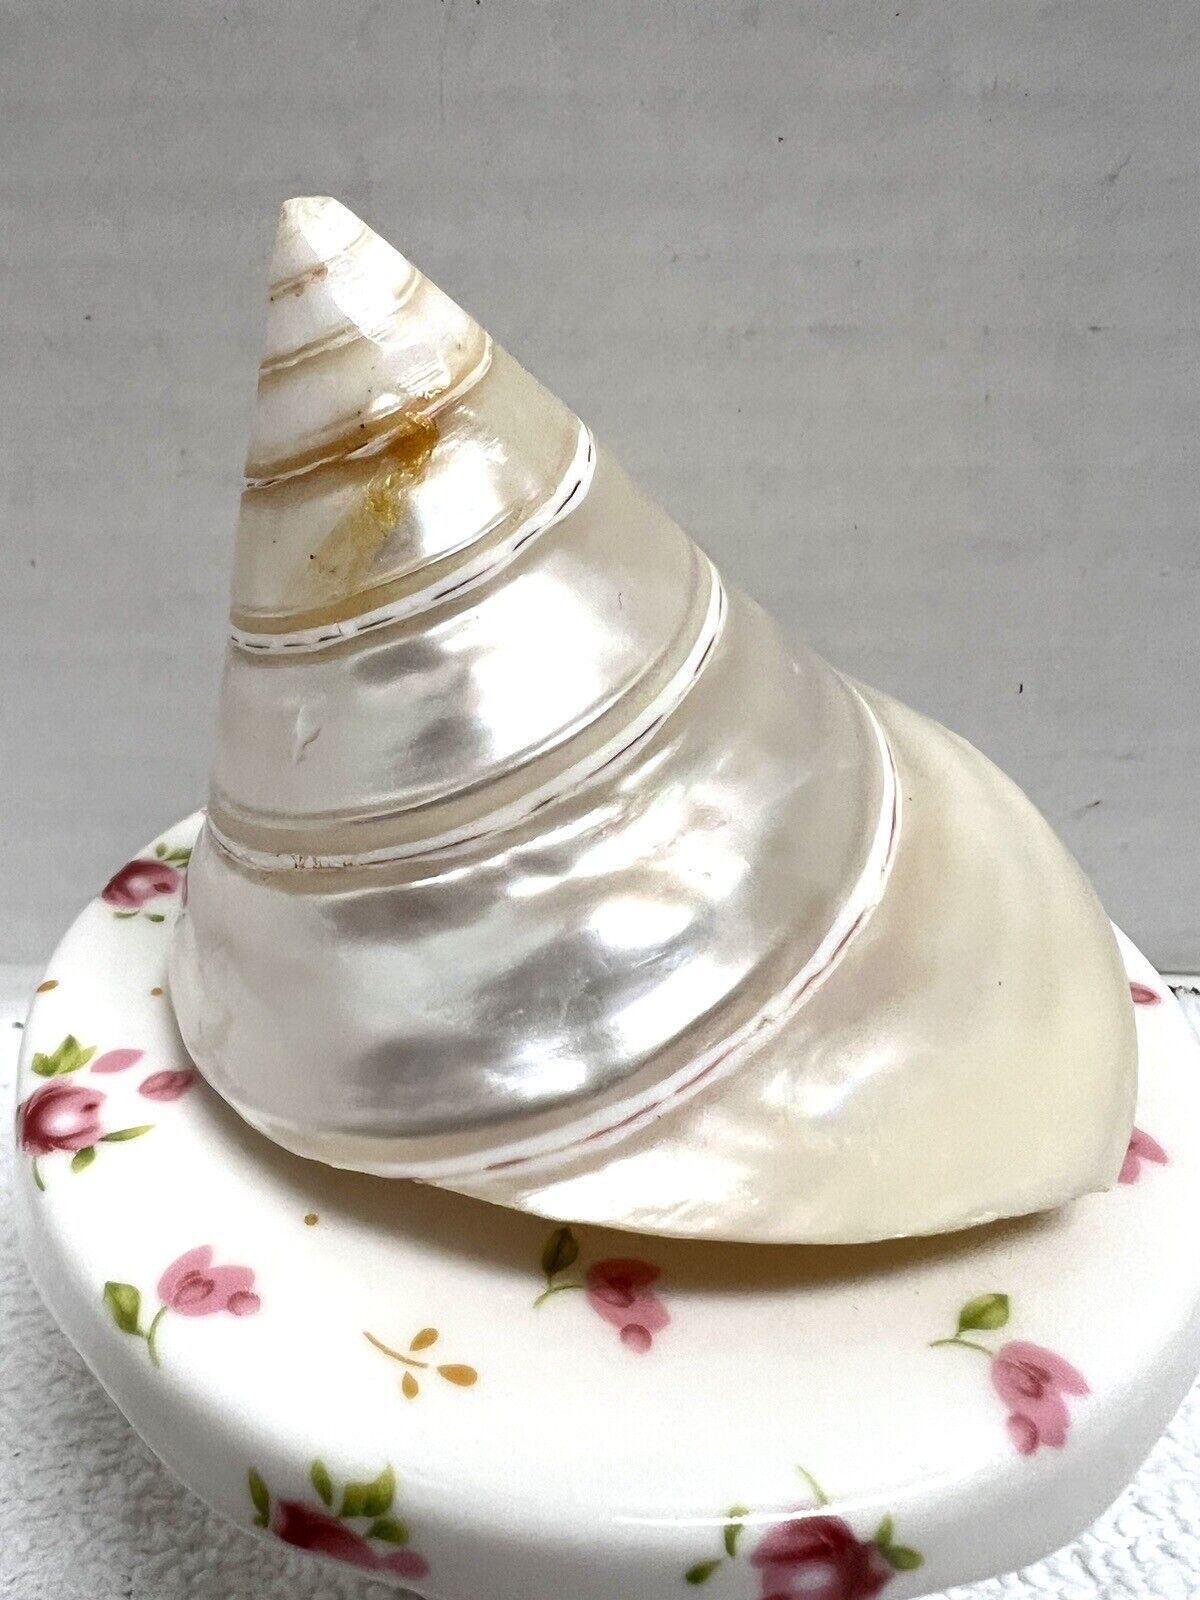 Real Seashell Trochus Conus Cone She’ll Top White Opalescent Pearl 3” Size Nice